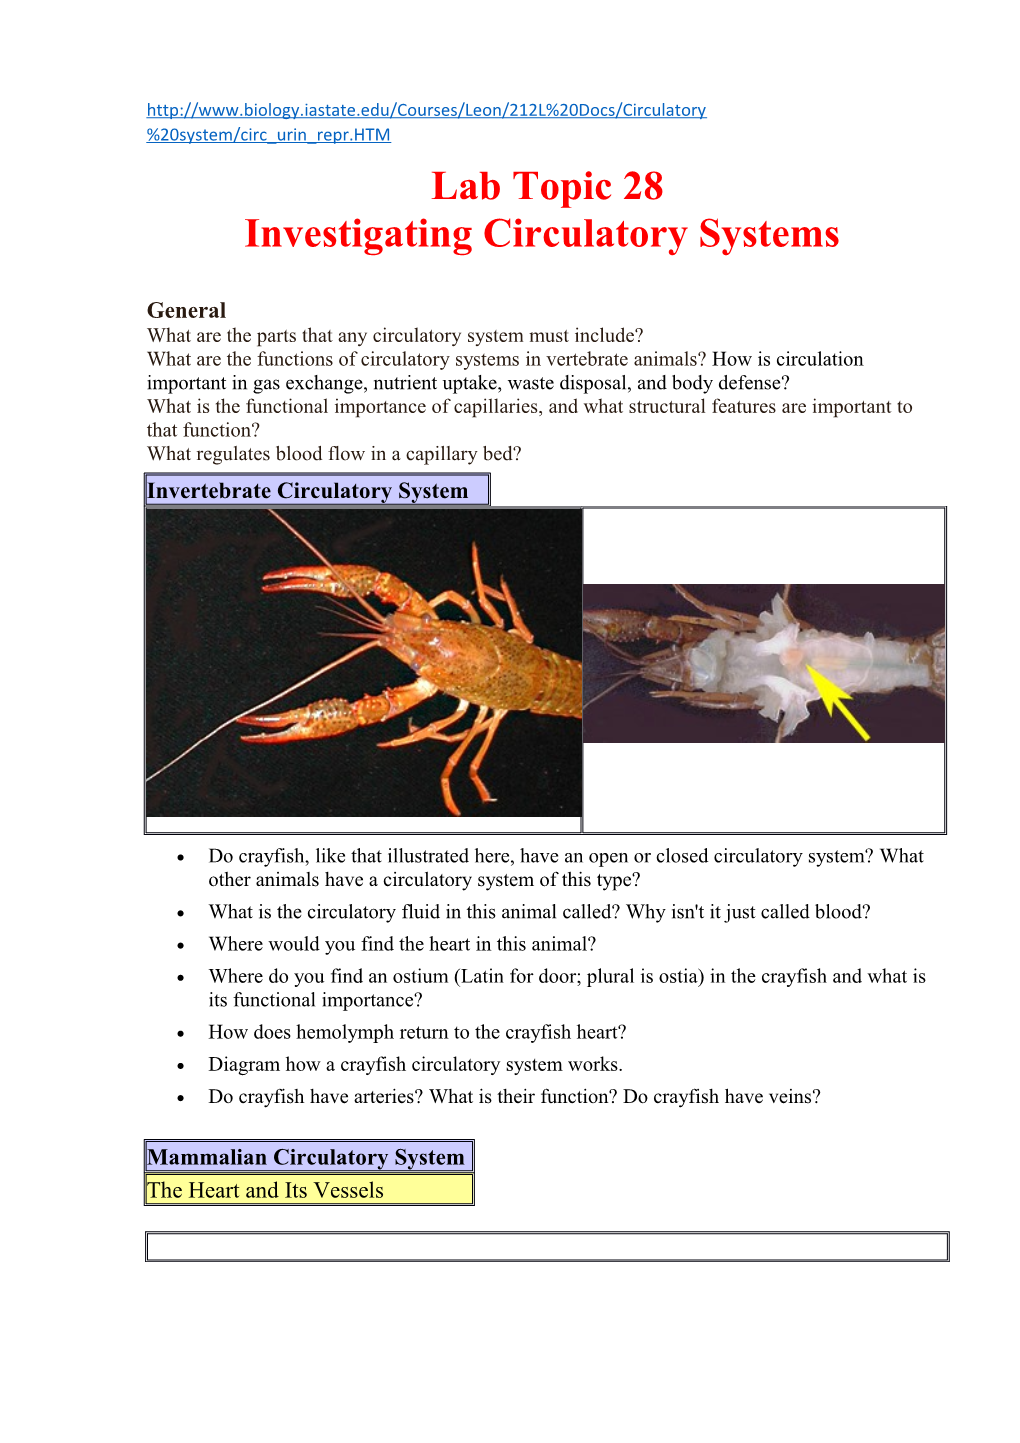 Lab Topic 28 Investigating Circulatory Systems